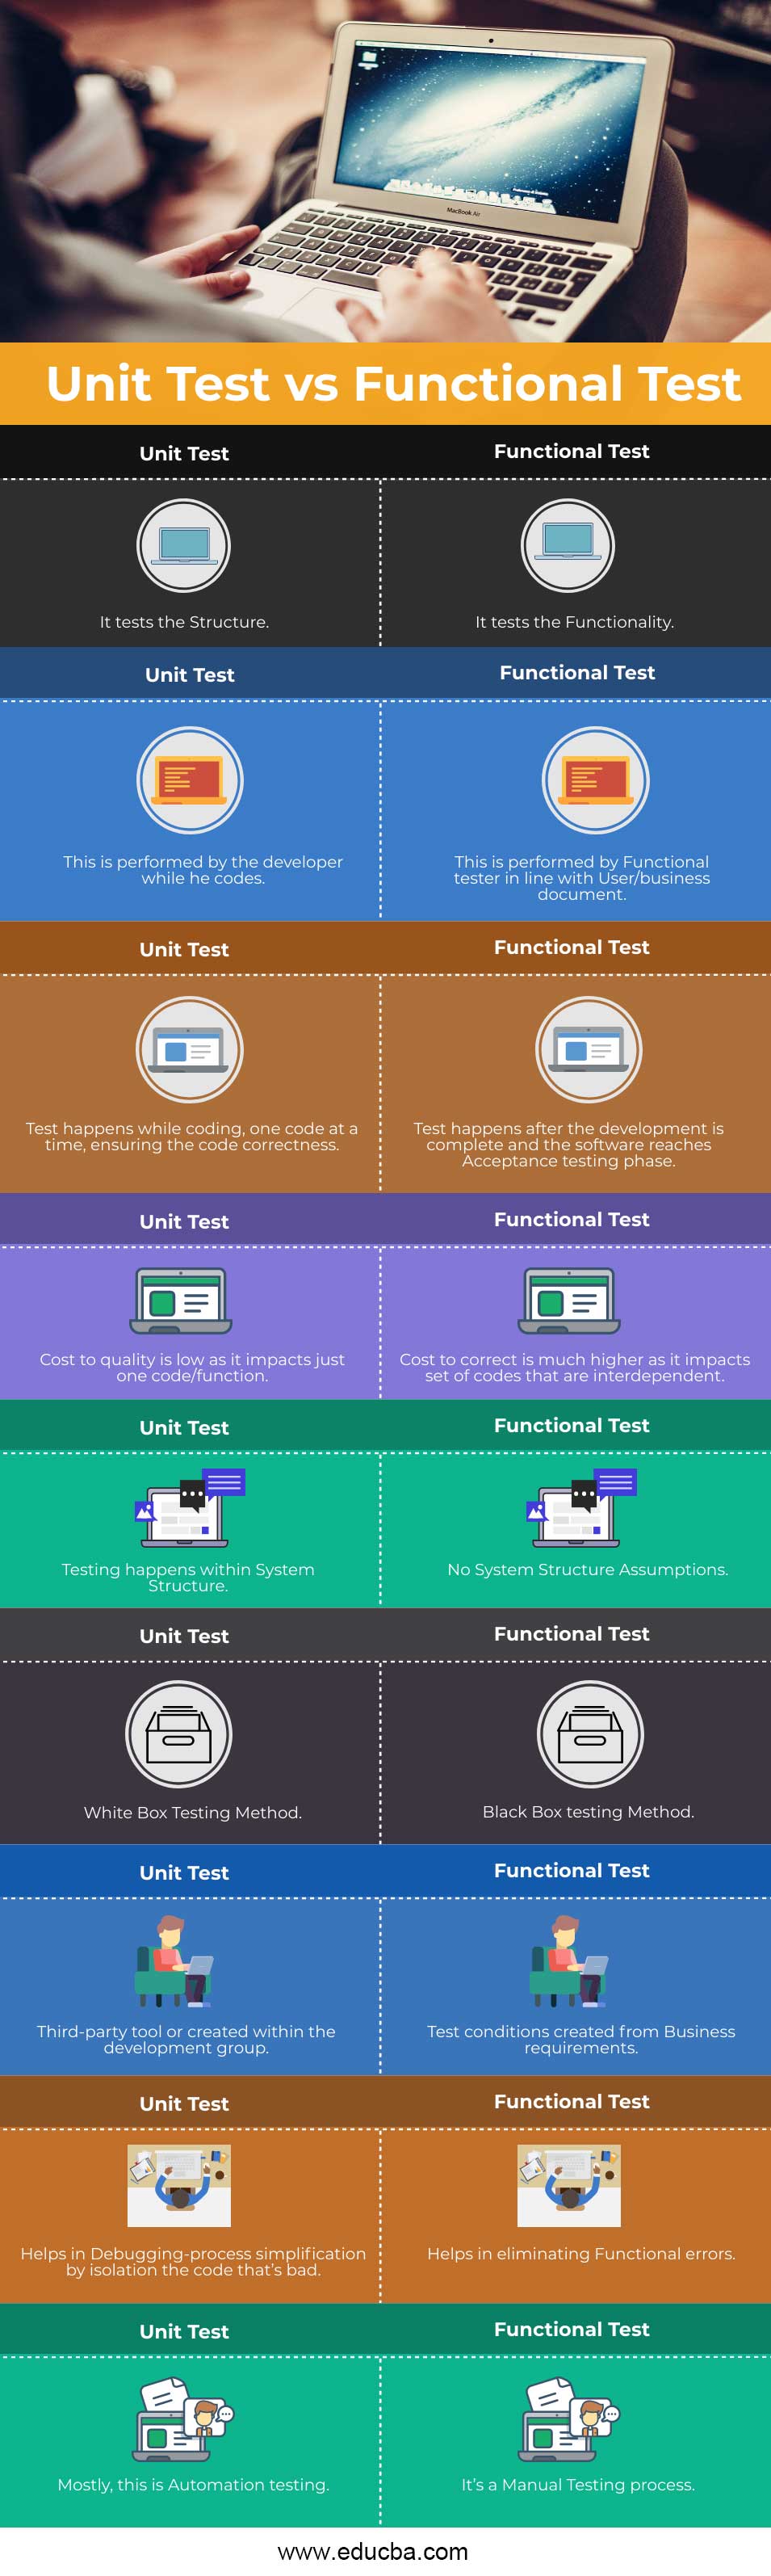 Unit-Test-vs-Functional-Test-info